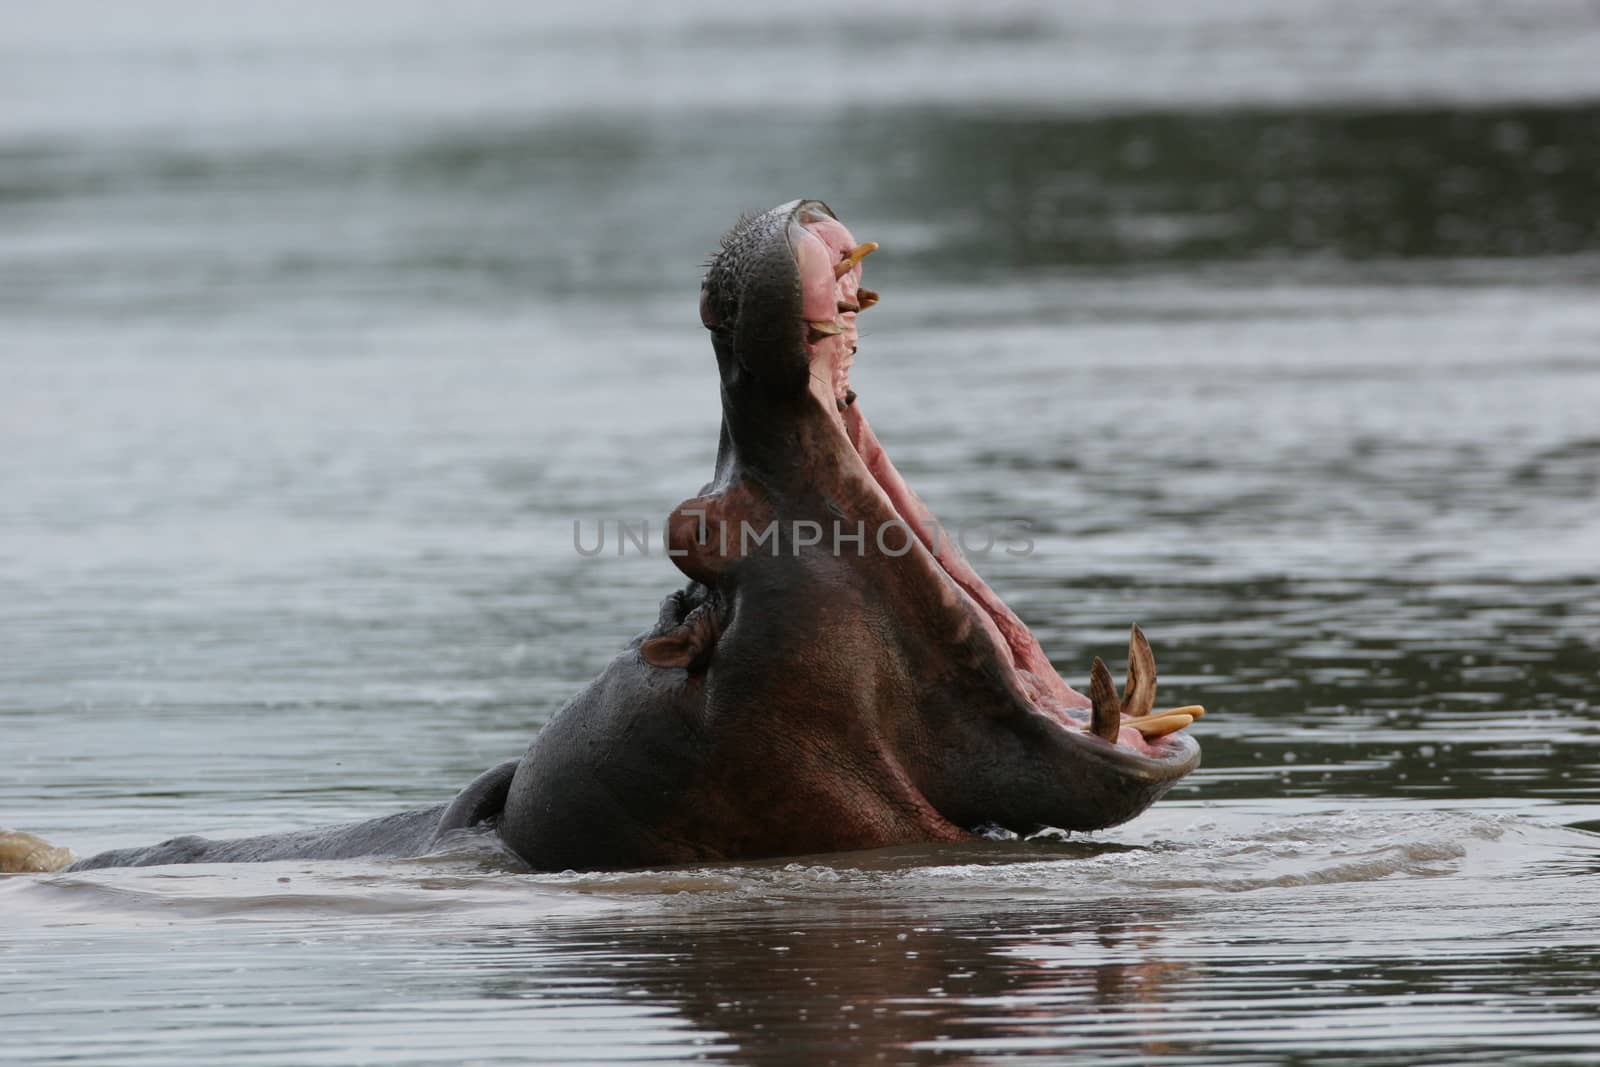 Wild Hippo in African river water hippopotamus (Hippopotamus amphibius)